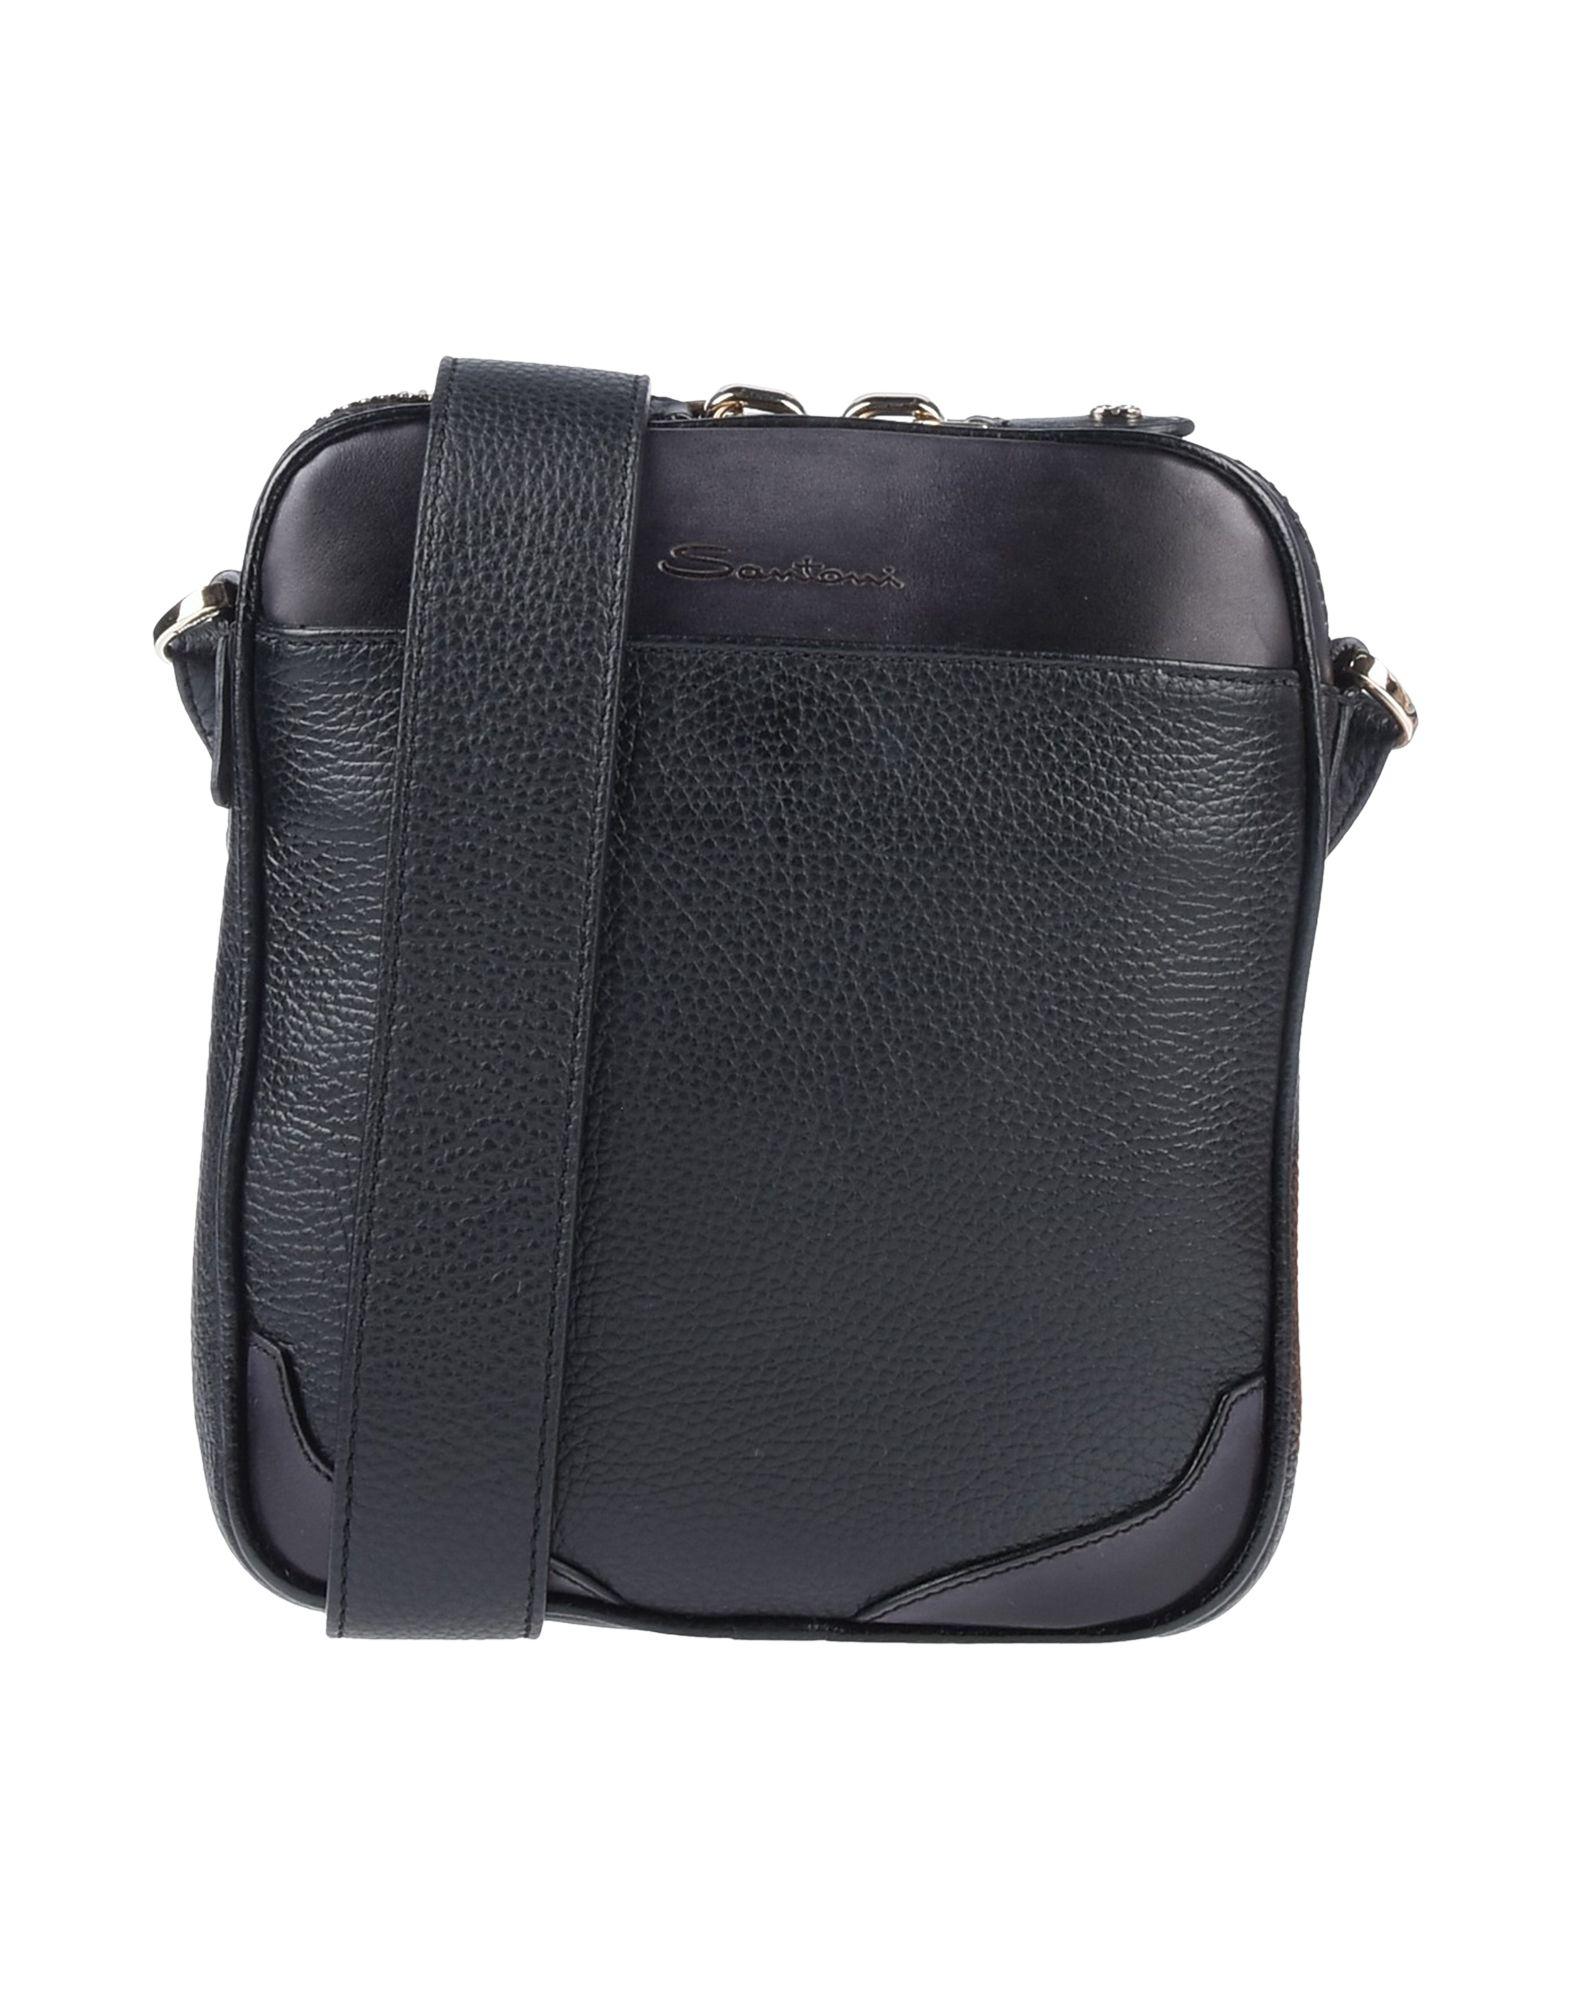 Santoni Leather Cross-body Bag in Black for Men - Lyst